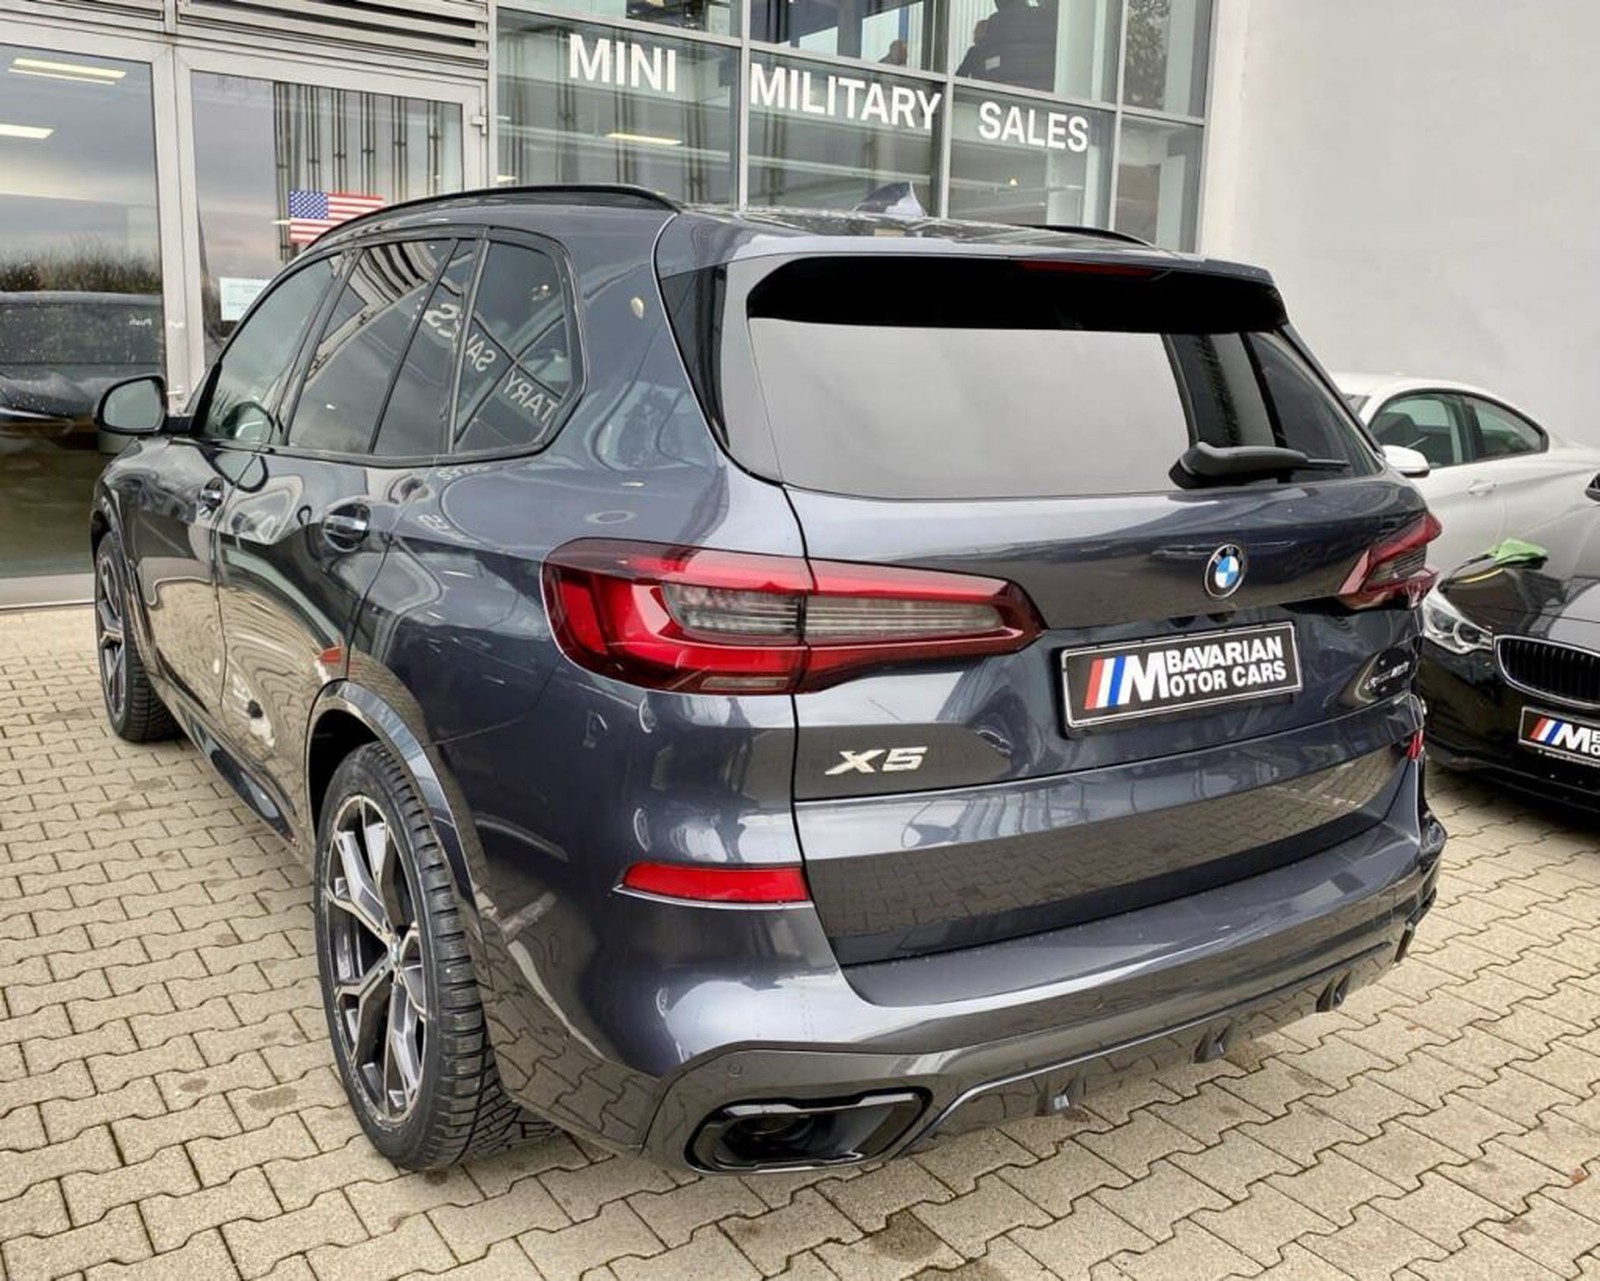 BMW X5 xDrive40i M Sport Package - Tax Free Military Sales in Würzburg